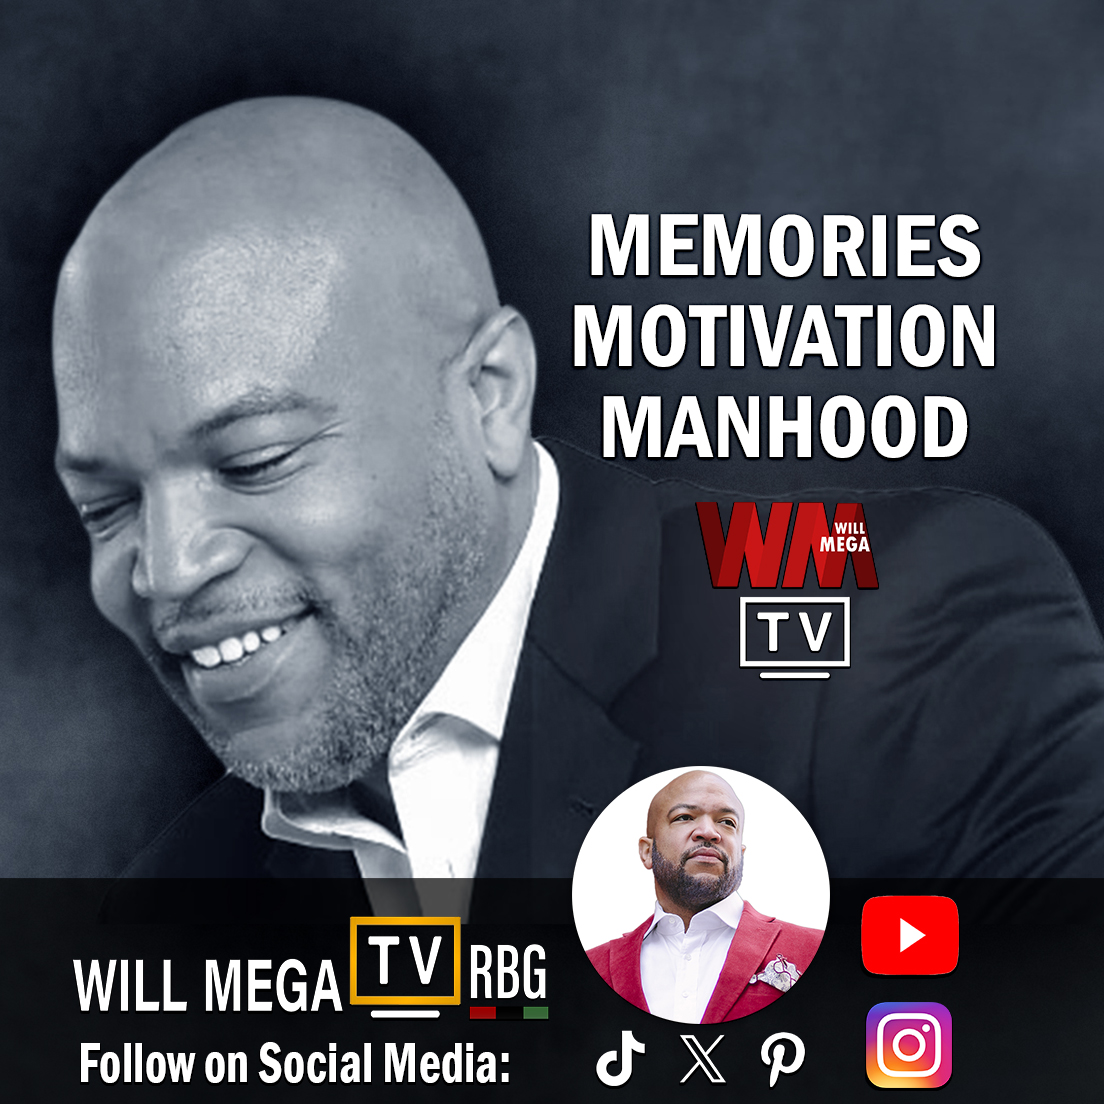 Will Mega - Memories | Motivation | Manhood
youtu.be/bmCUcBOVZcw

#WillMega #WillMegaTV #WestPhiladelphia #MotivationalSpeaker #Educator #Historian #Broadcaster #WestPhilly